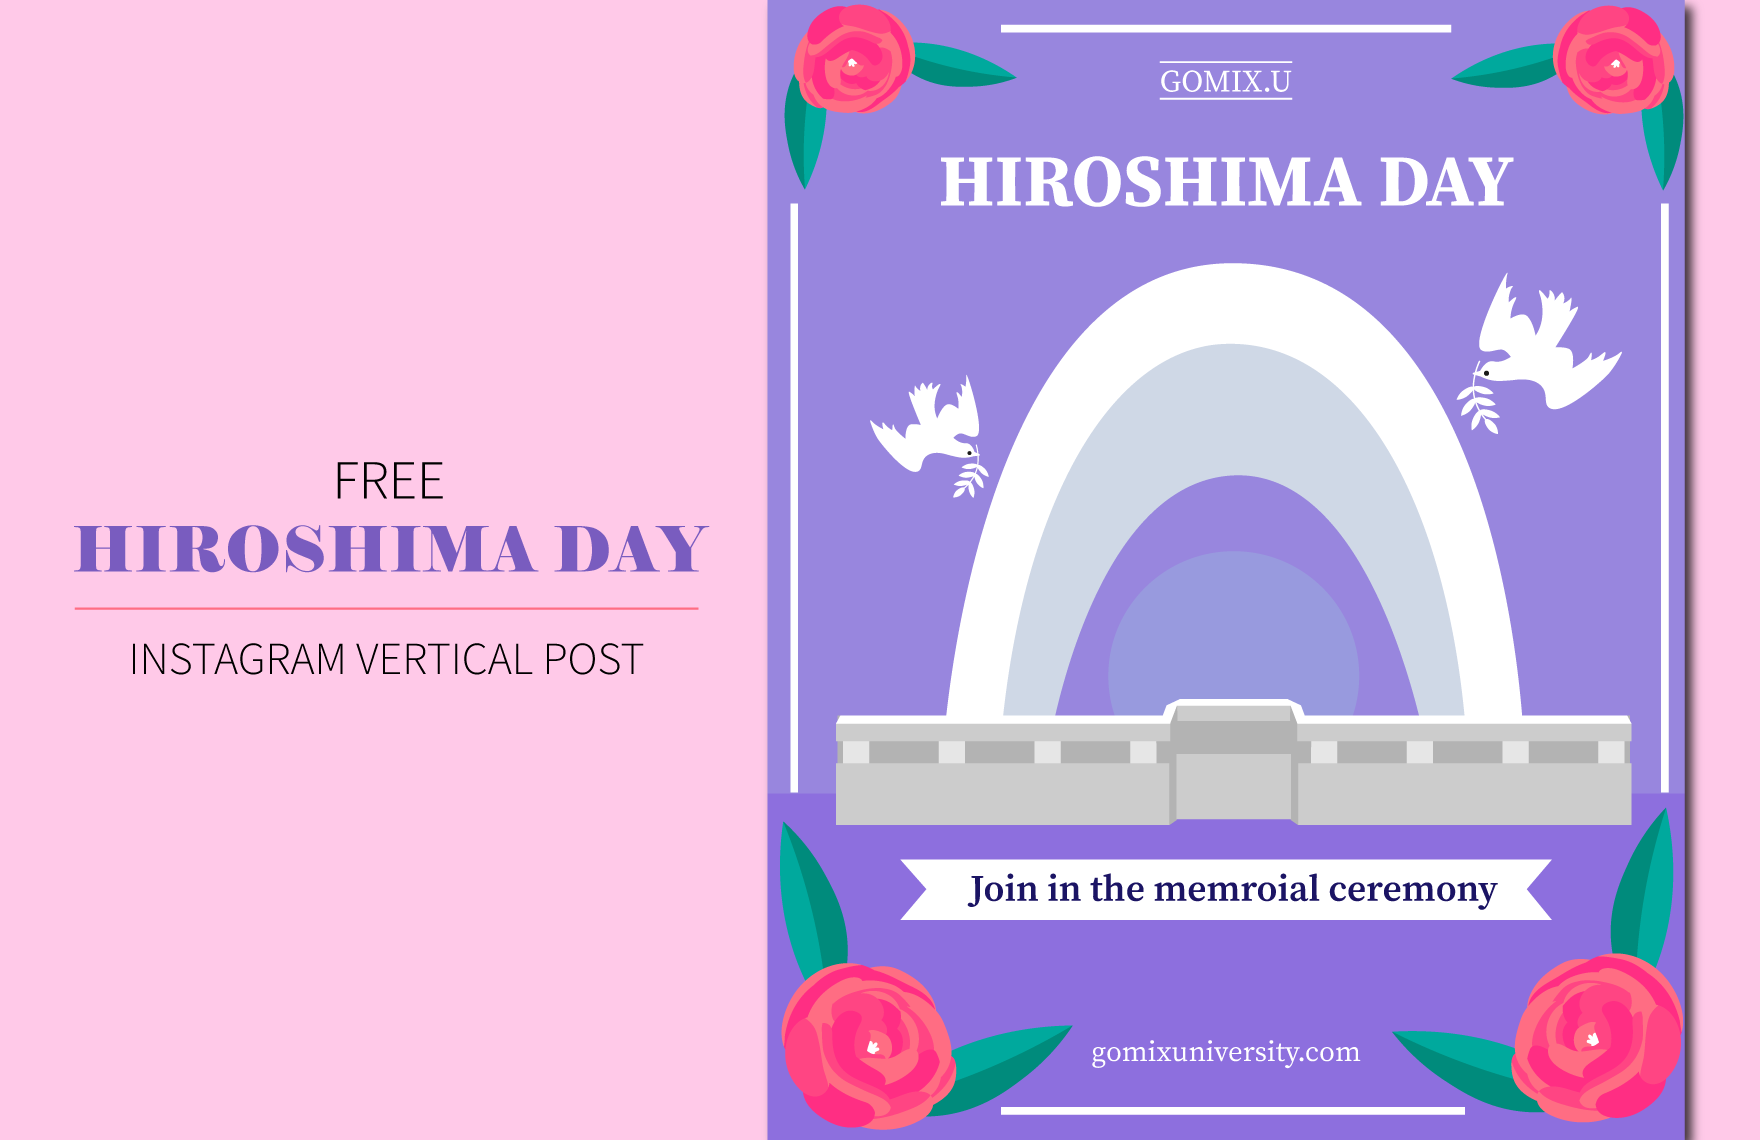 Free Hiroshima Day  Instagram Vertical Post in Illustrator, PSD, EPS, SVG, JPG, PNG